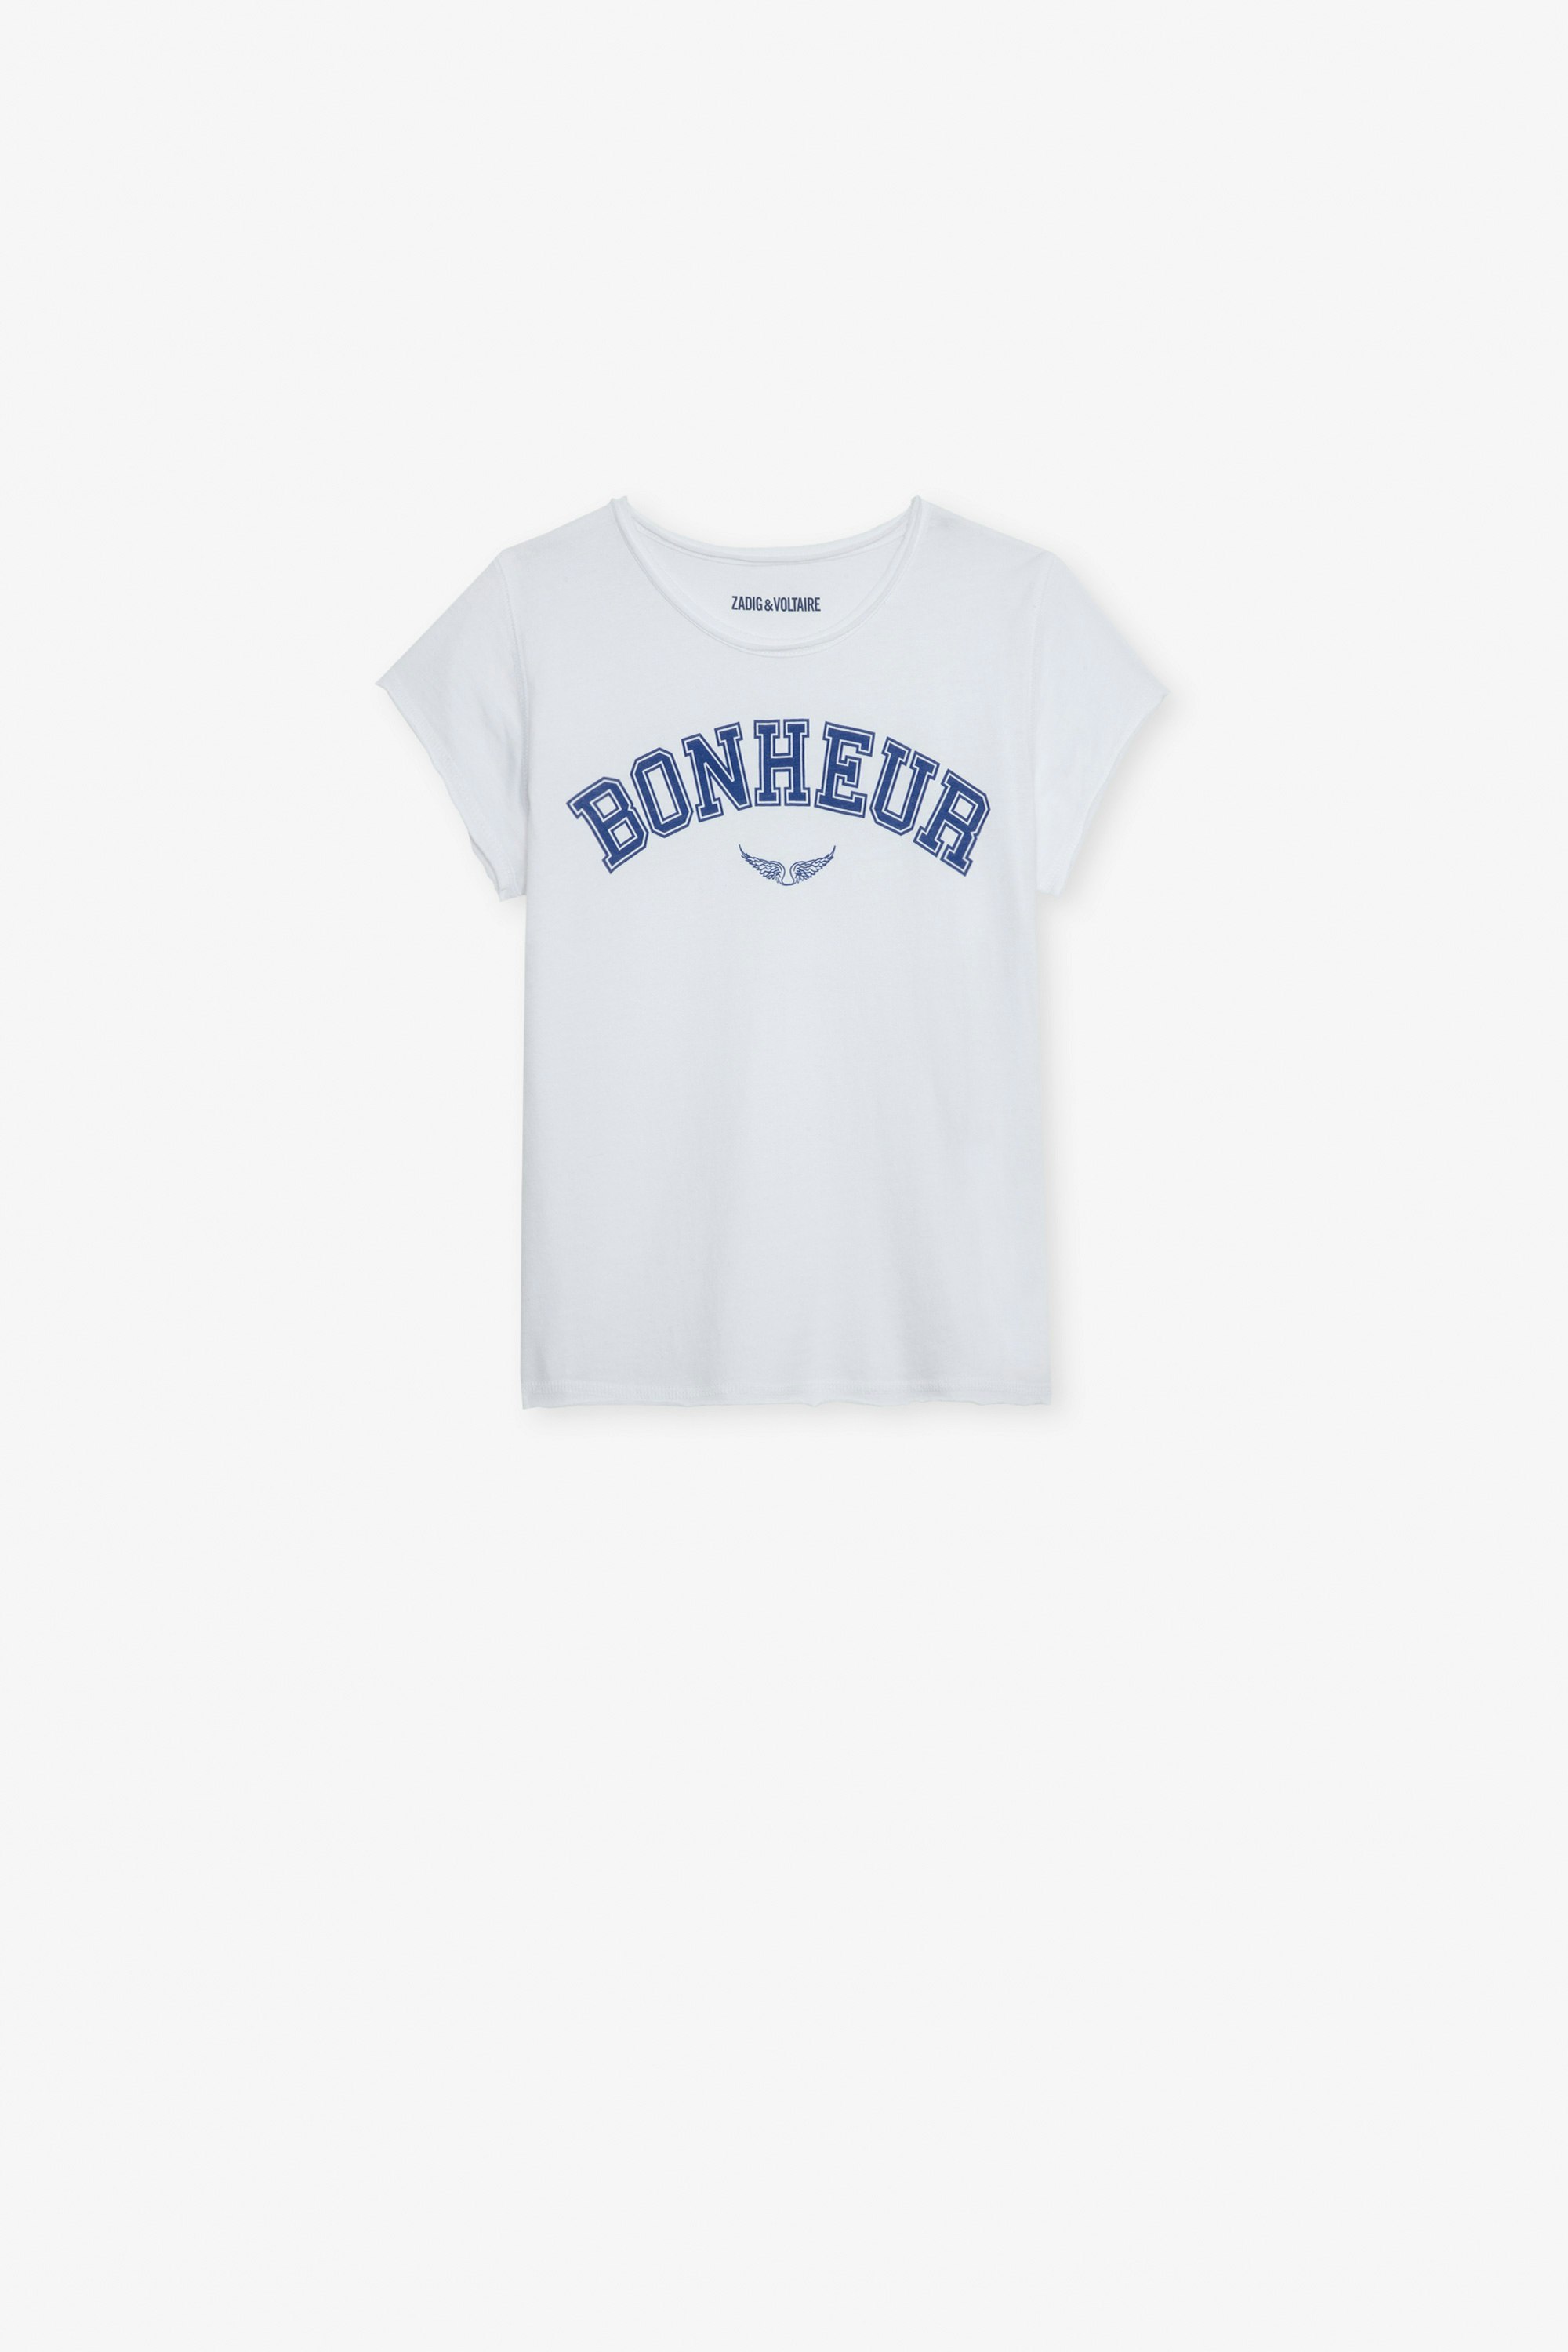 Amber Girls’ T-Shirt Girls’ white cotton jersey short-sleeved T-shirt with “Bonheur” slogan.